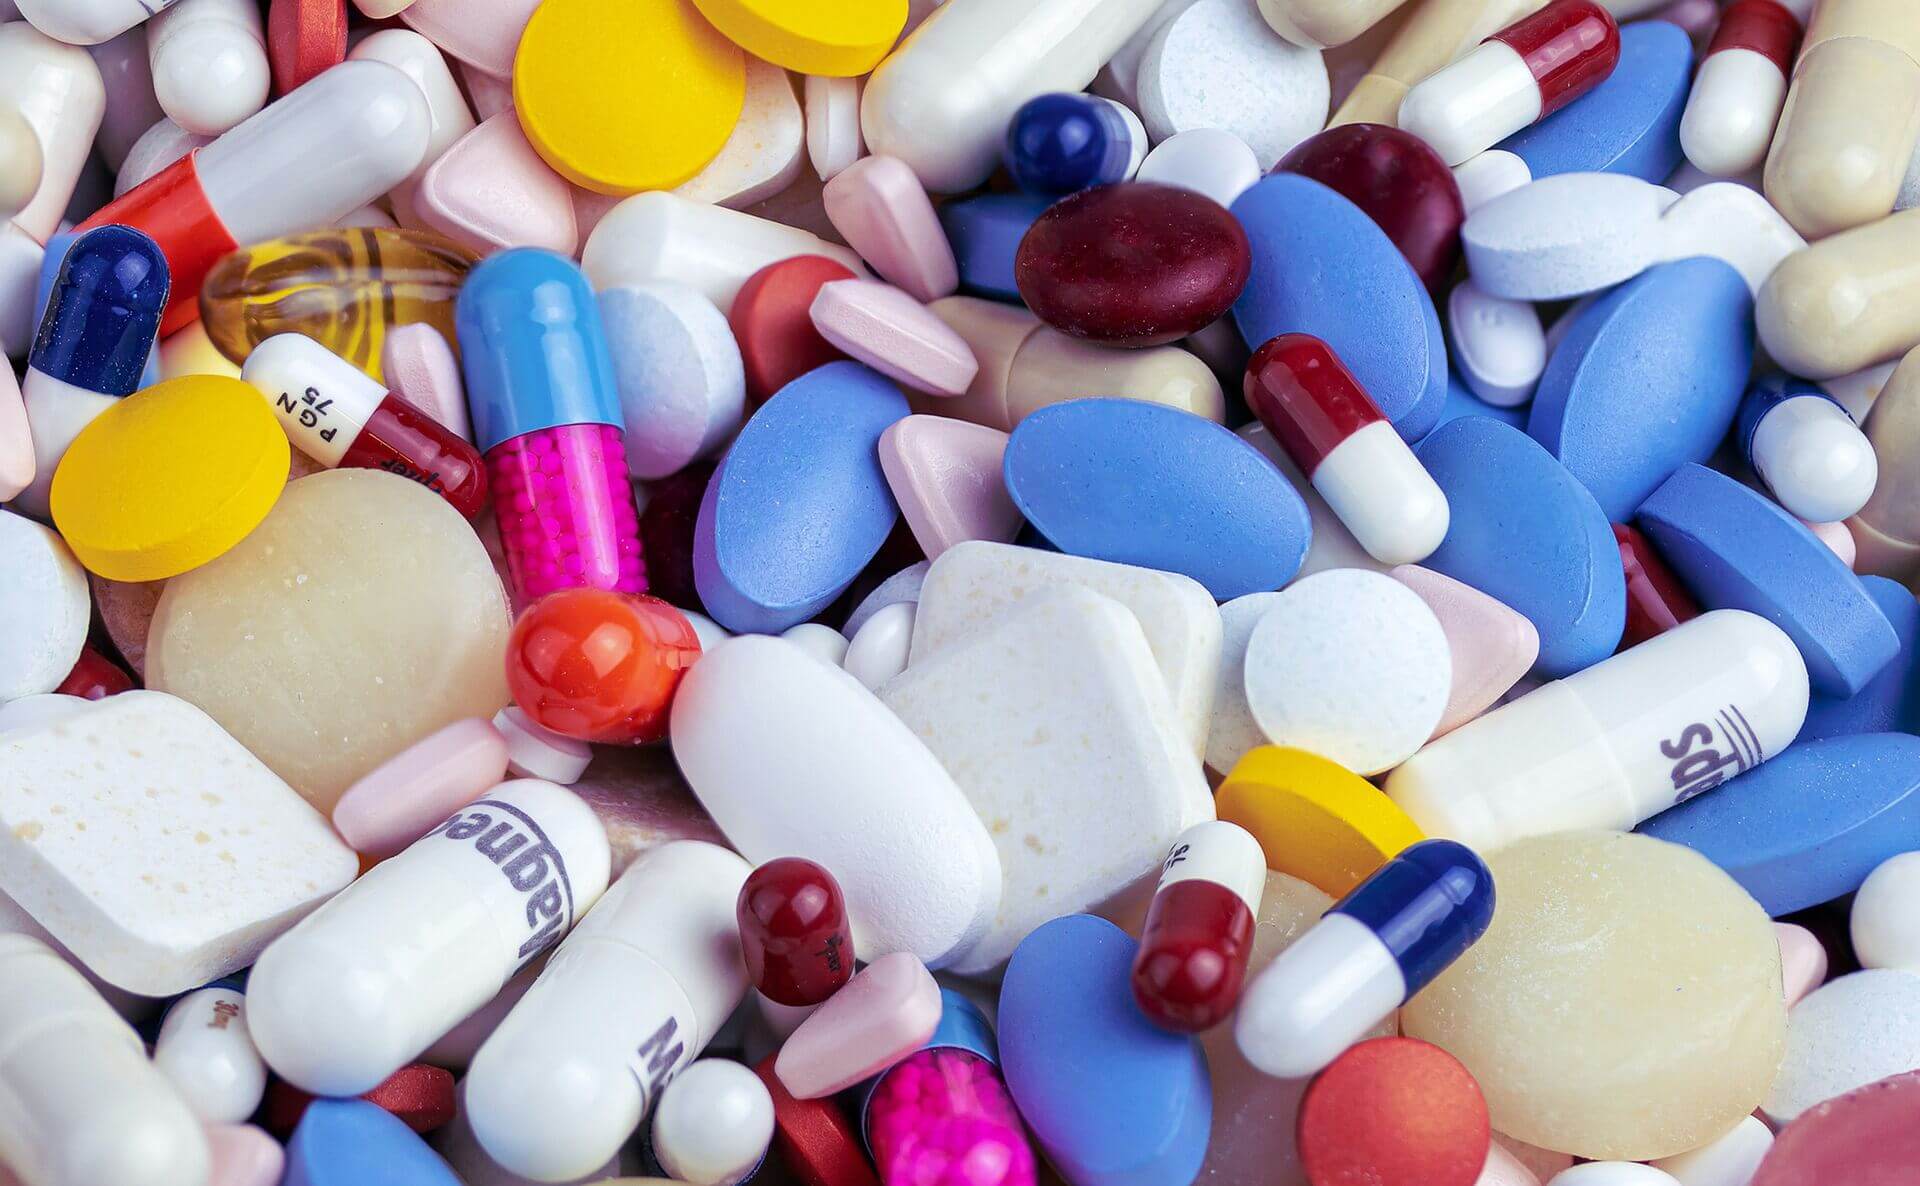 medications contributing to pharmacy medication errors